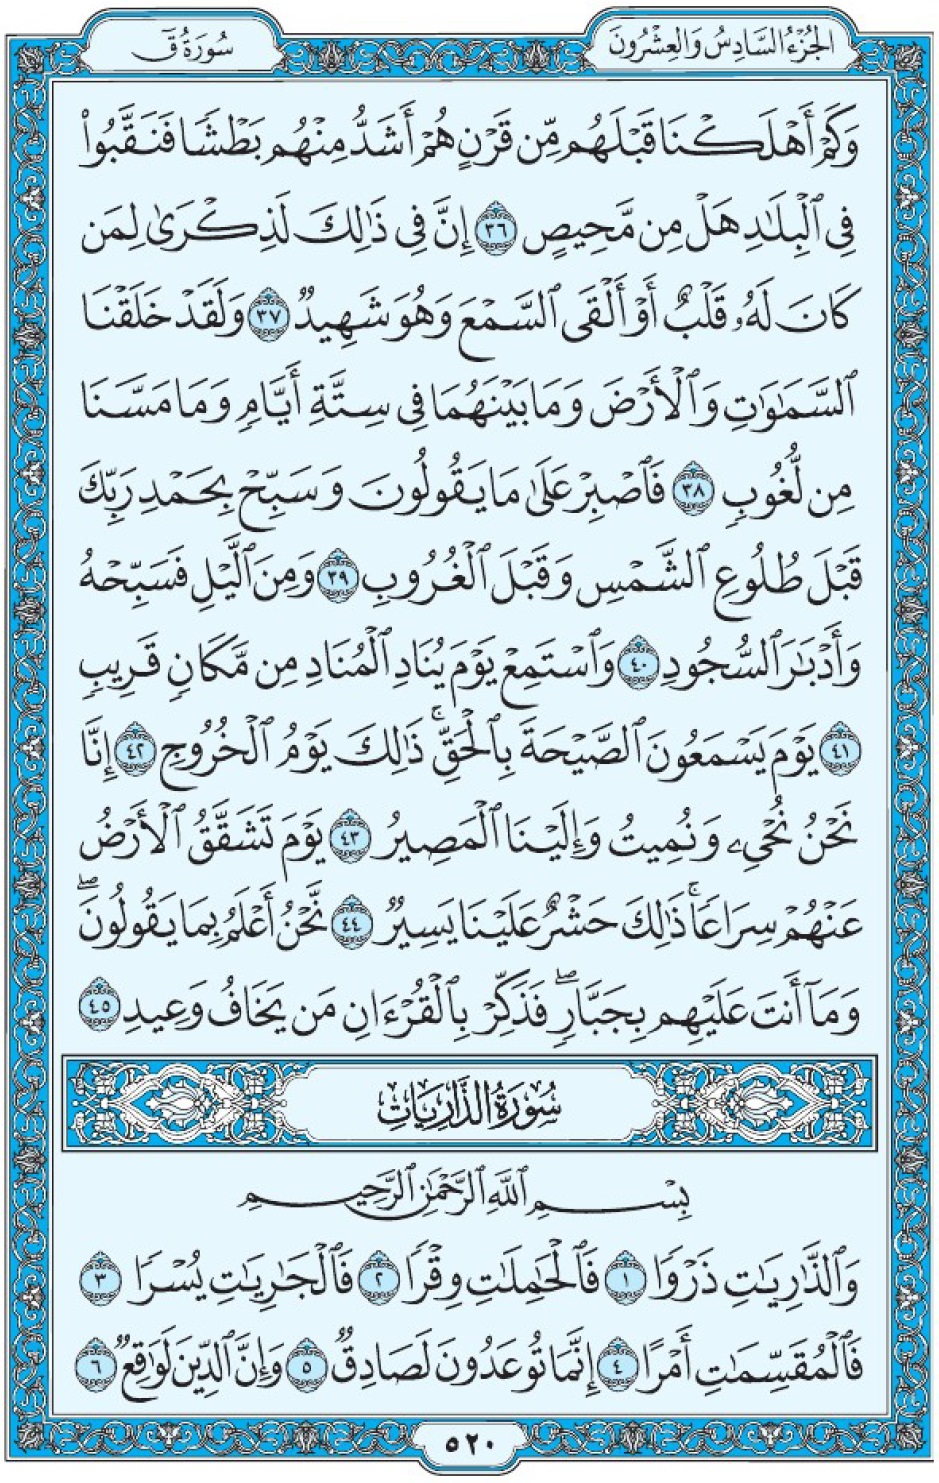 Коран Мединский мусхаф страница 520, сура 51 Аз-Зарият سورة ٥١ الذاريات 